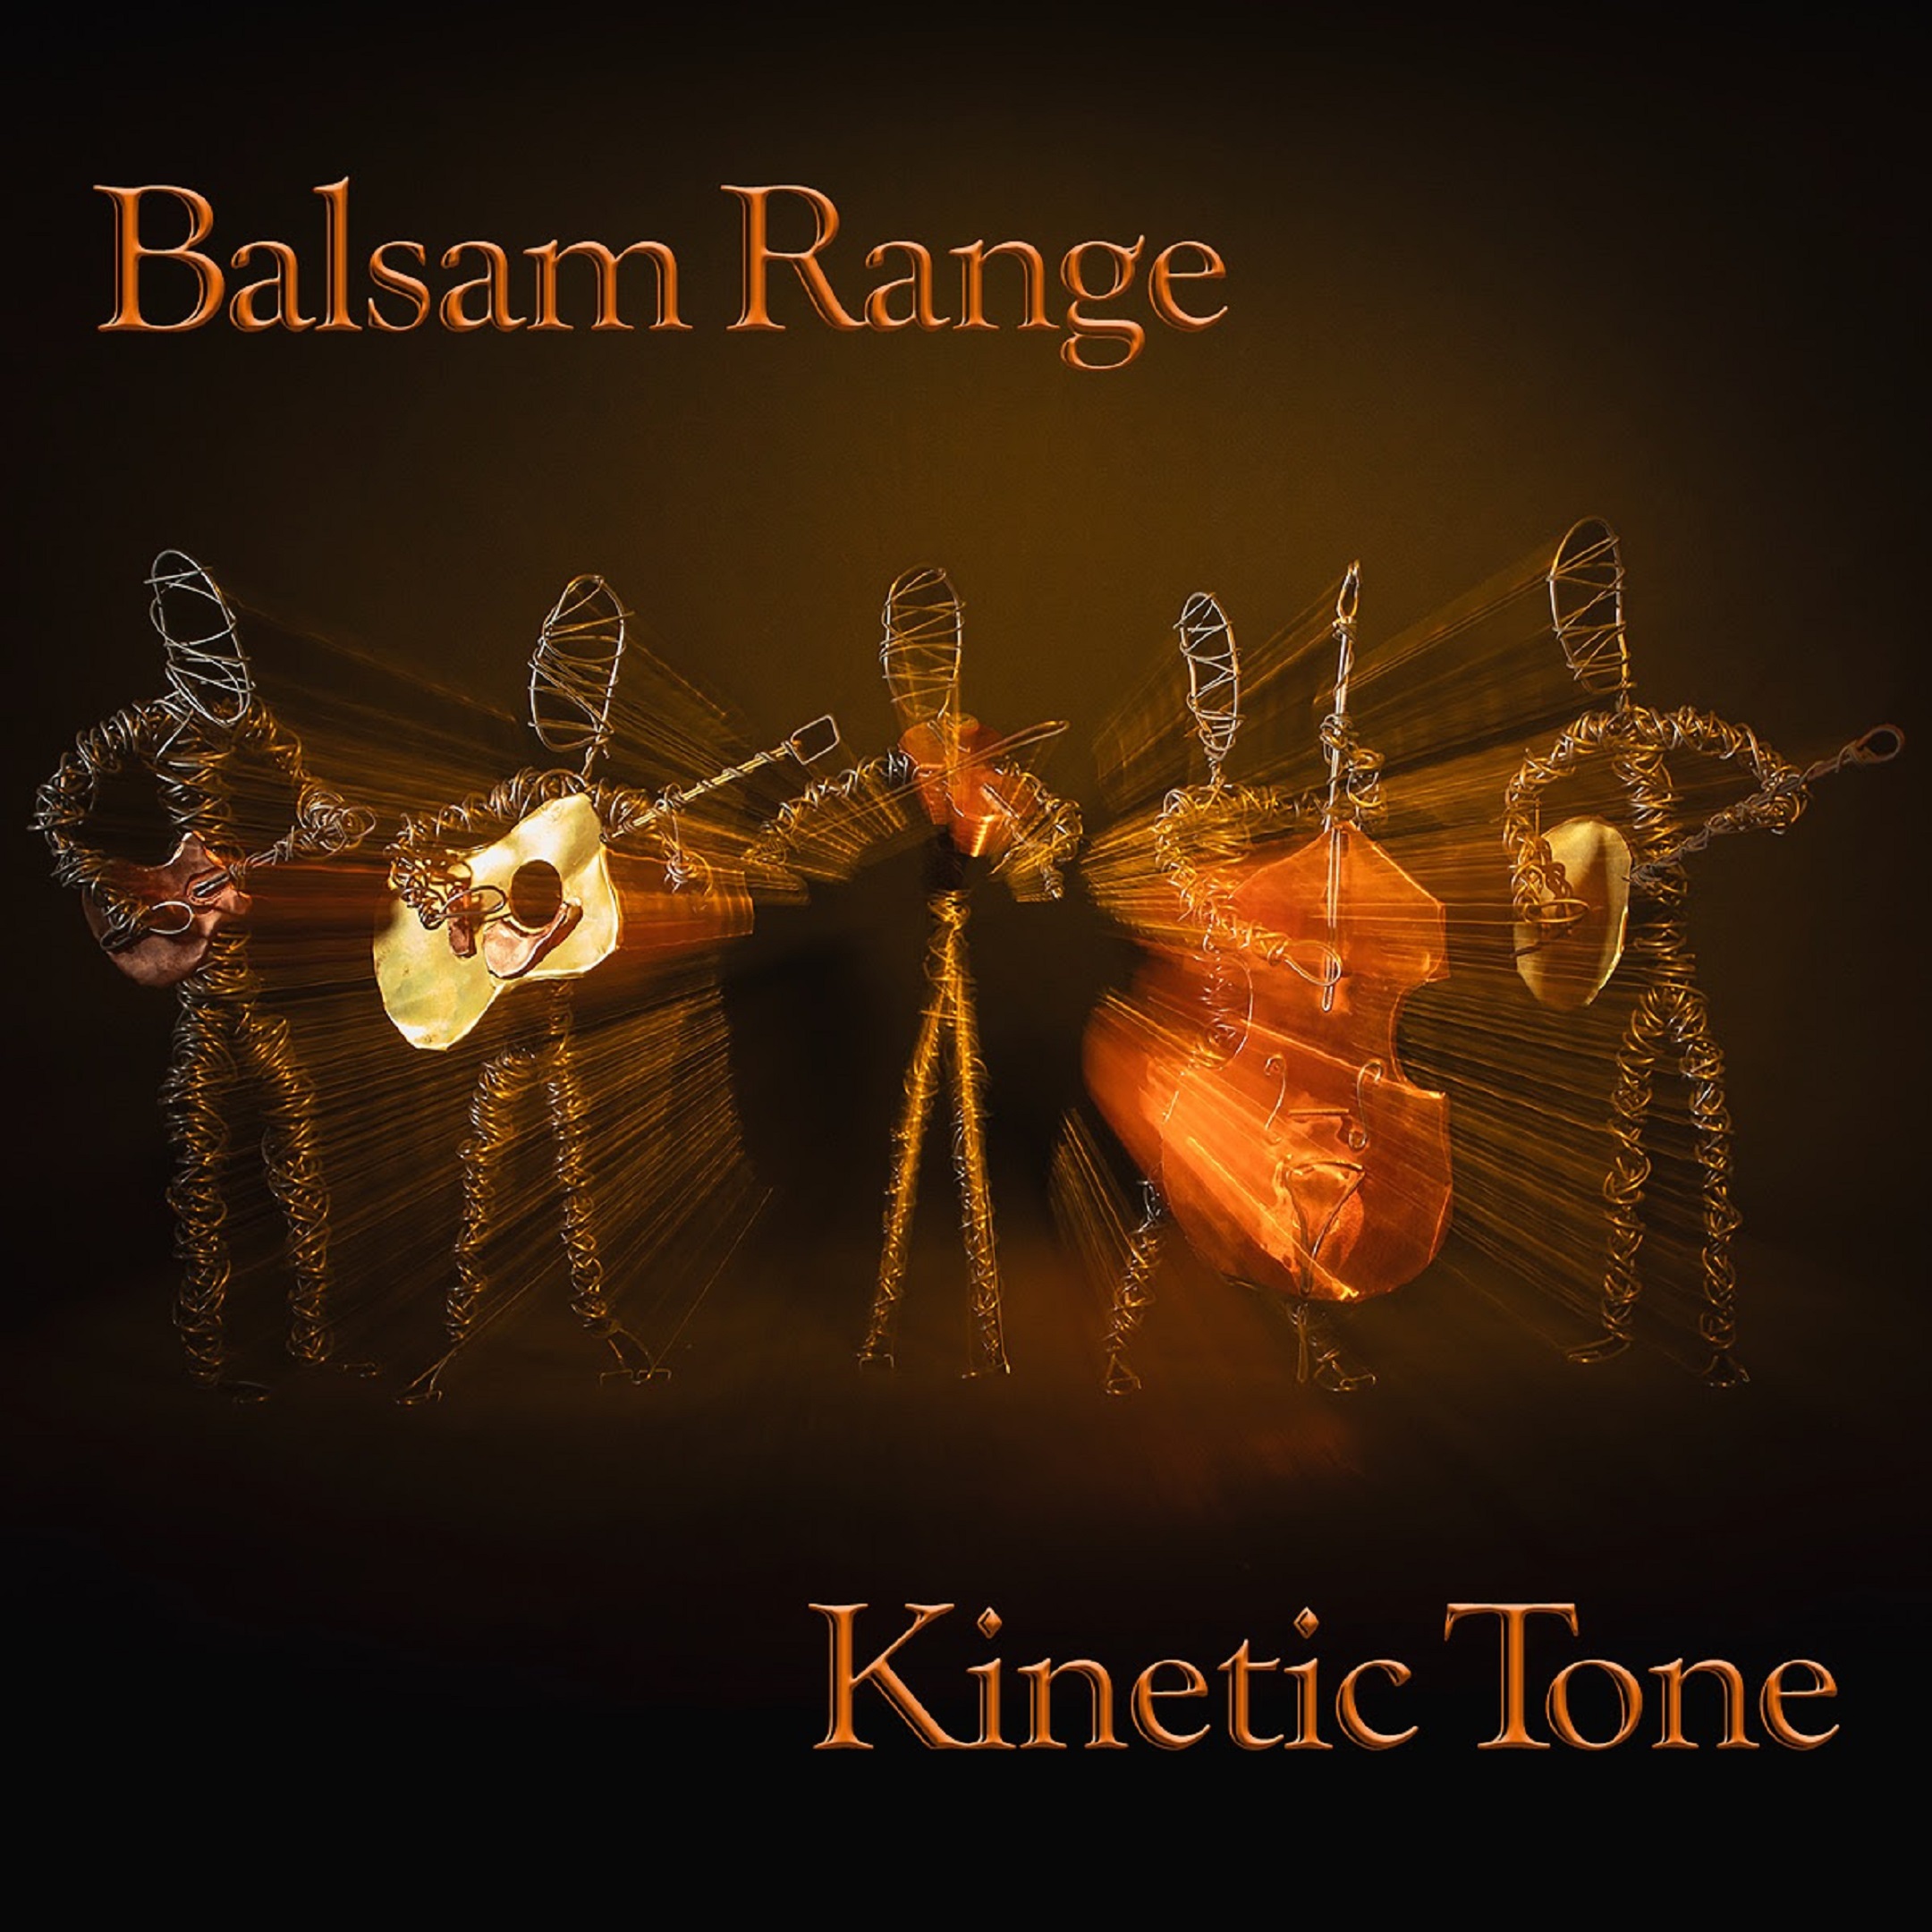 Balsam Range announces upcoming album, Kinetic Tone